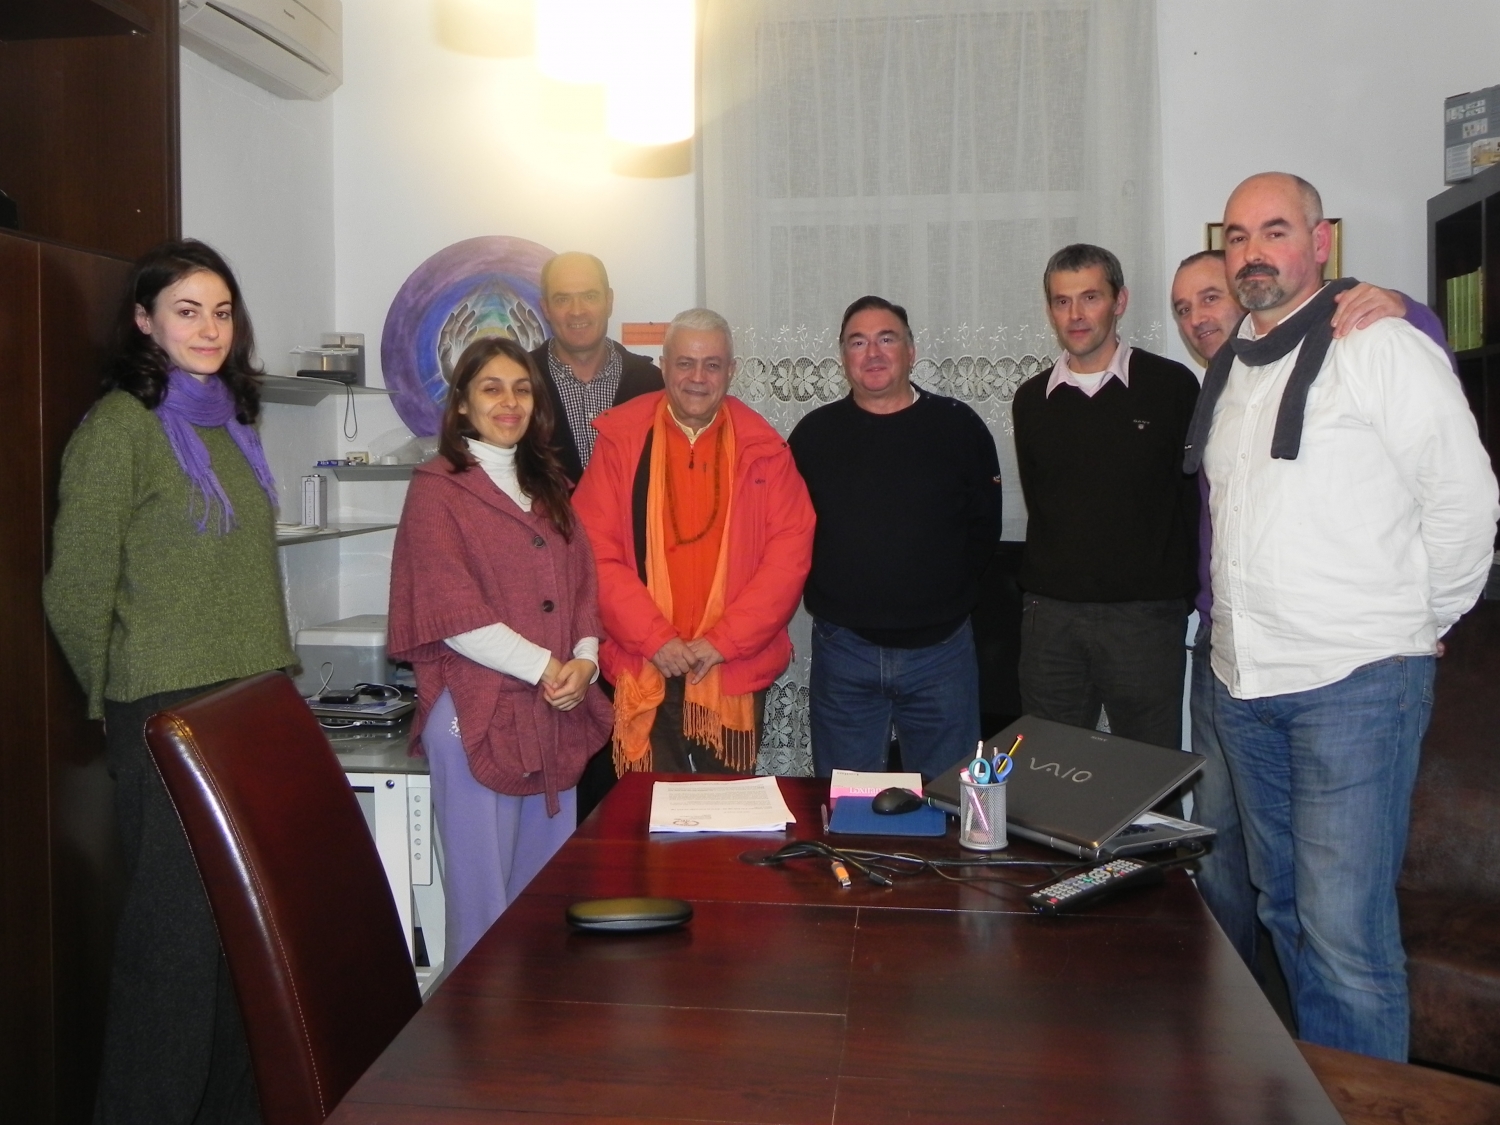 Meeting of H.H. Jagat Guru Amrta Sūryānanda Mahā Rāja with Maestro Madhavacharya - Zestoa, Euskadi - 2012, January